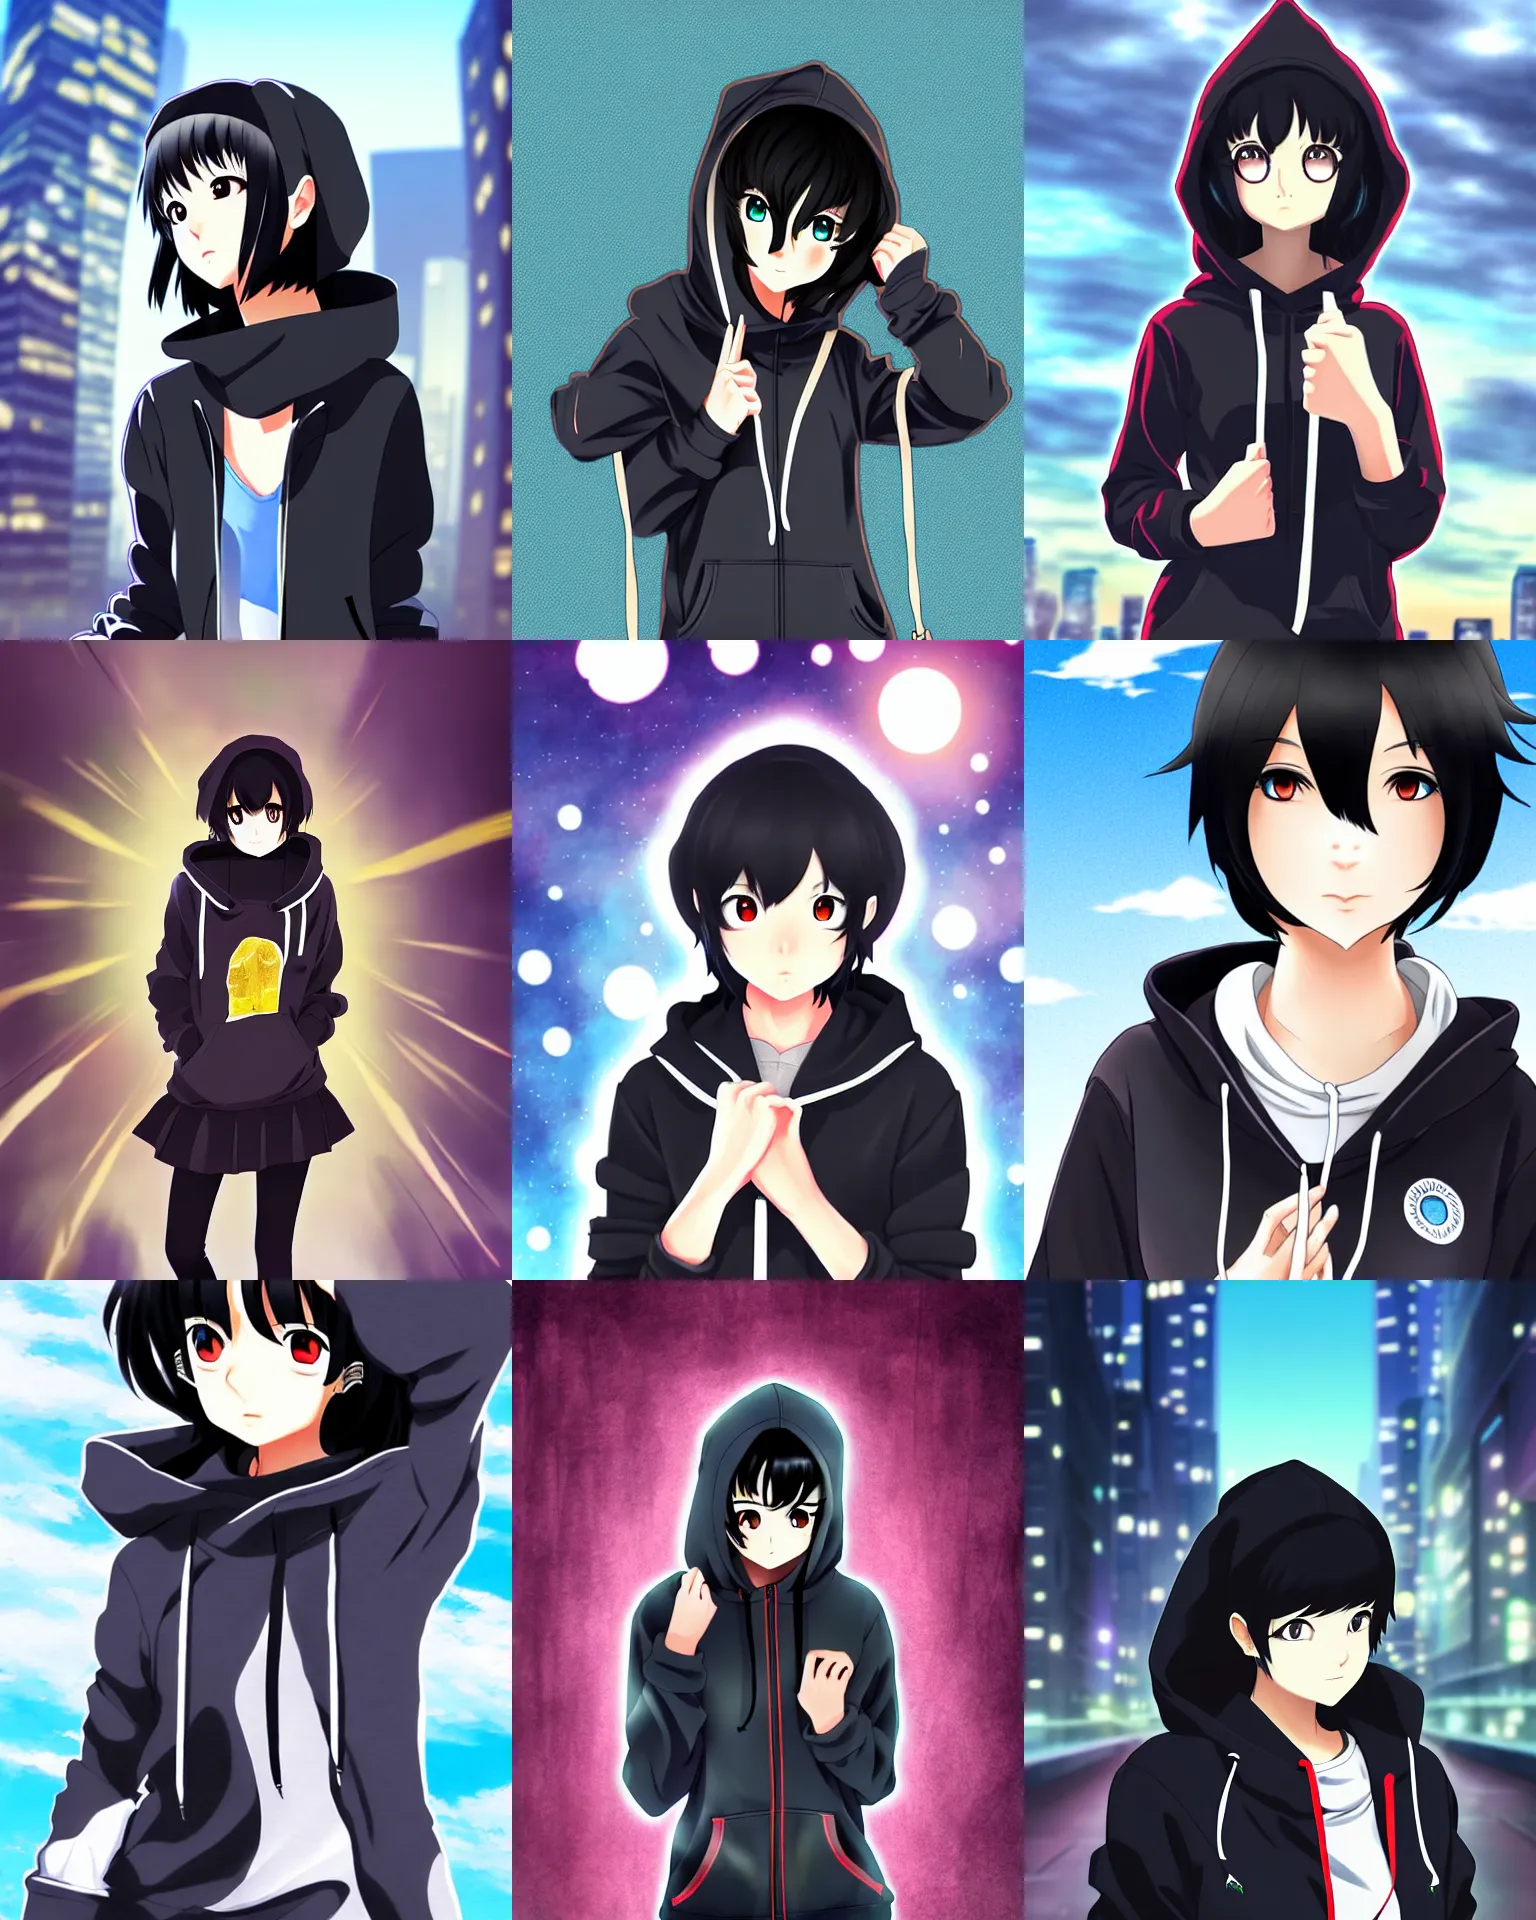 Prompt: black haired girl wearing hoodie, city, anime fantasy artwork, shinkai makoto